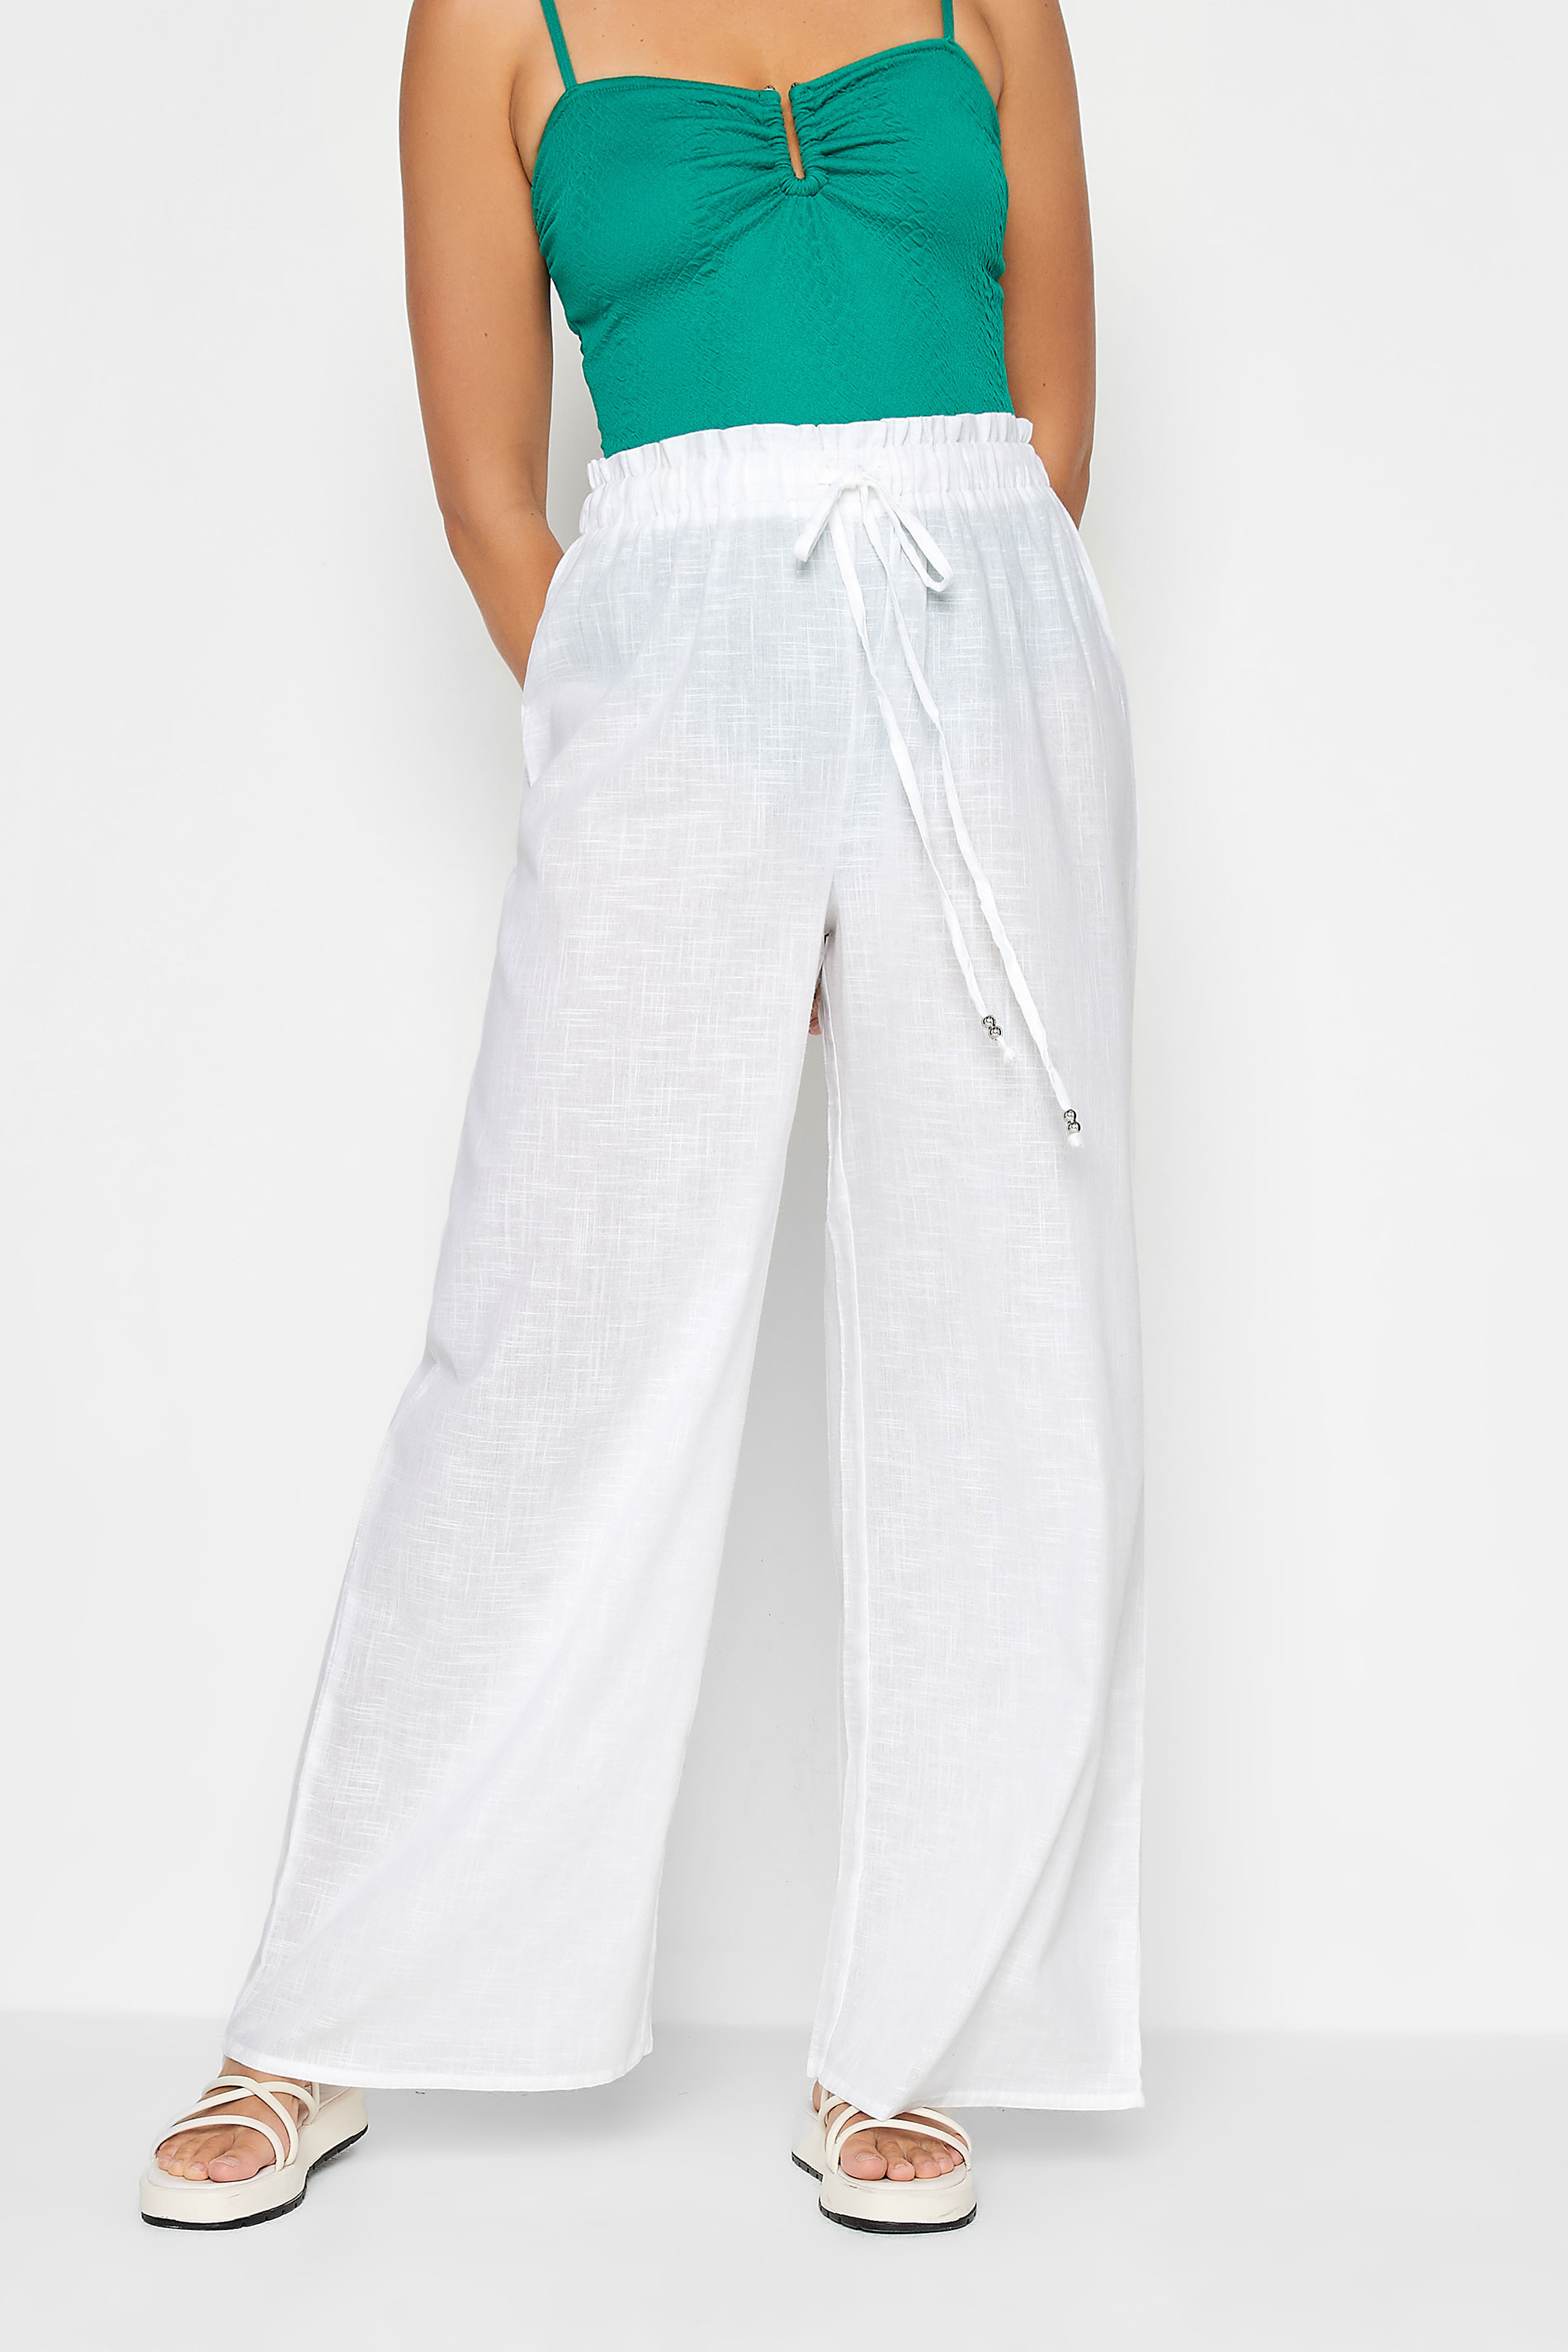 Women Elastic Waist Beach Trousers Yoga Casual Cotton Linen Baggy Wide Leg  Pants | eBay